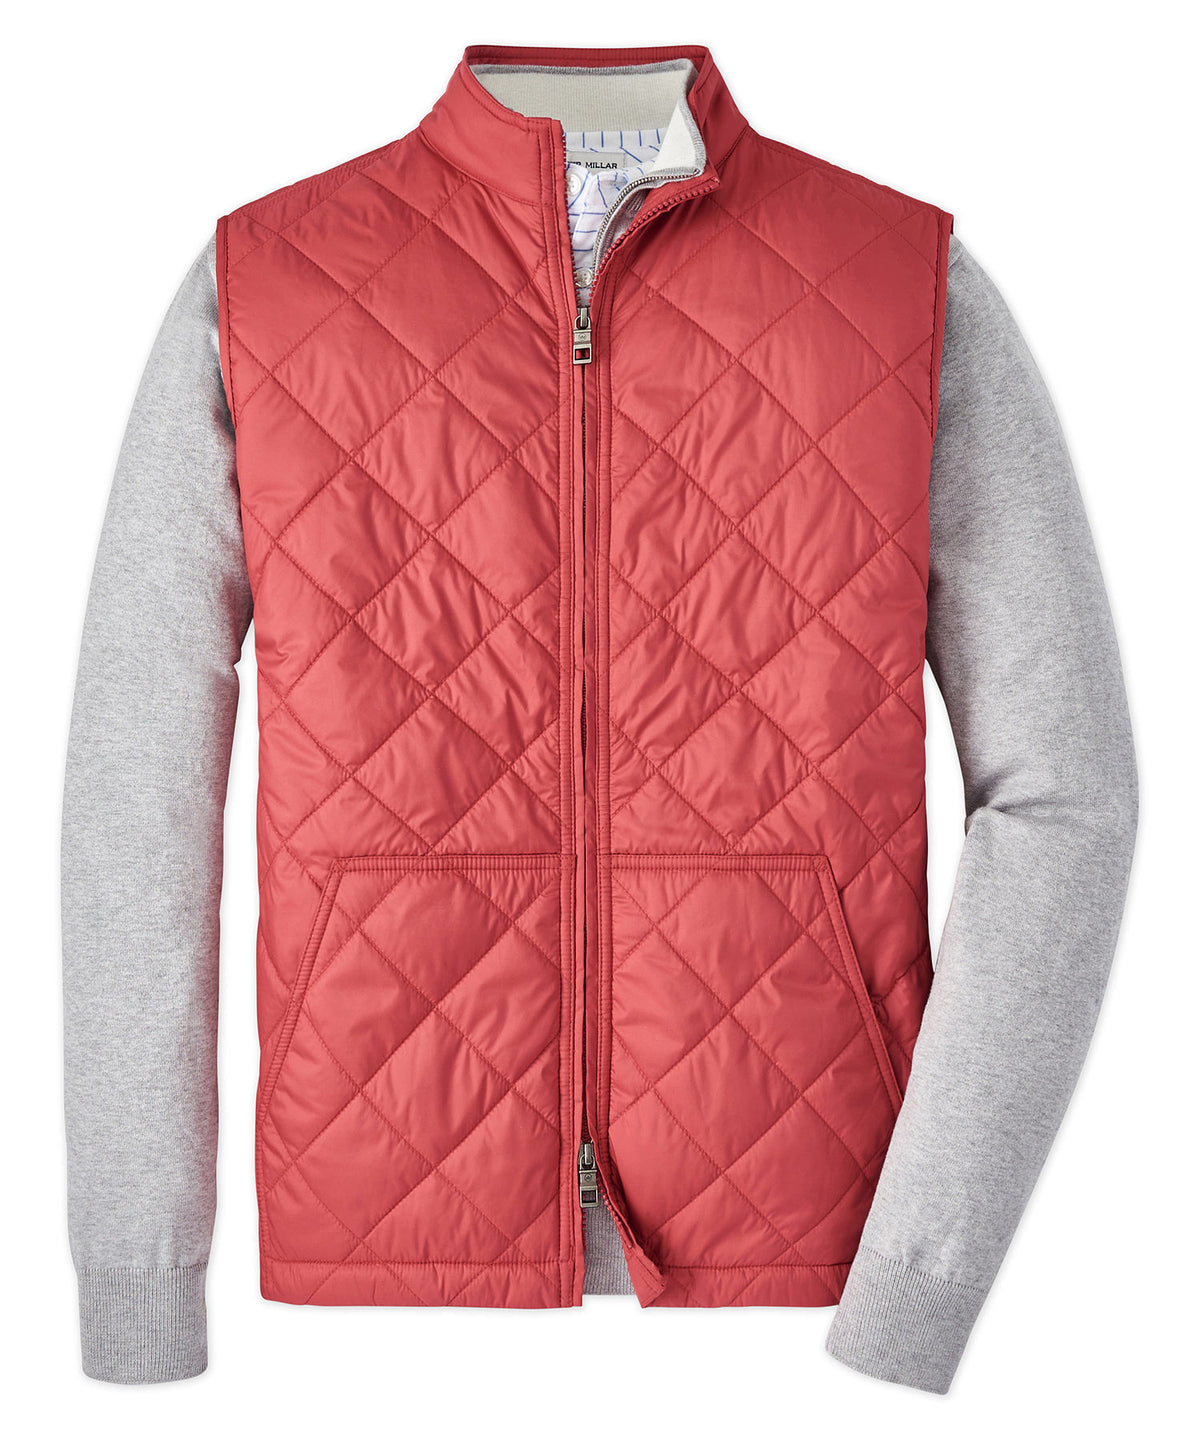 Peter Millar Bedford Outerwear Vest, Men's Big & Tall